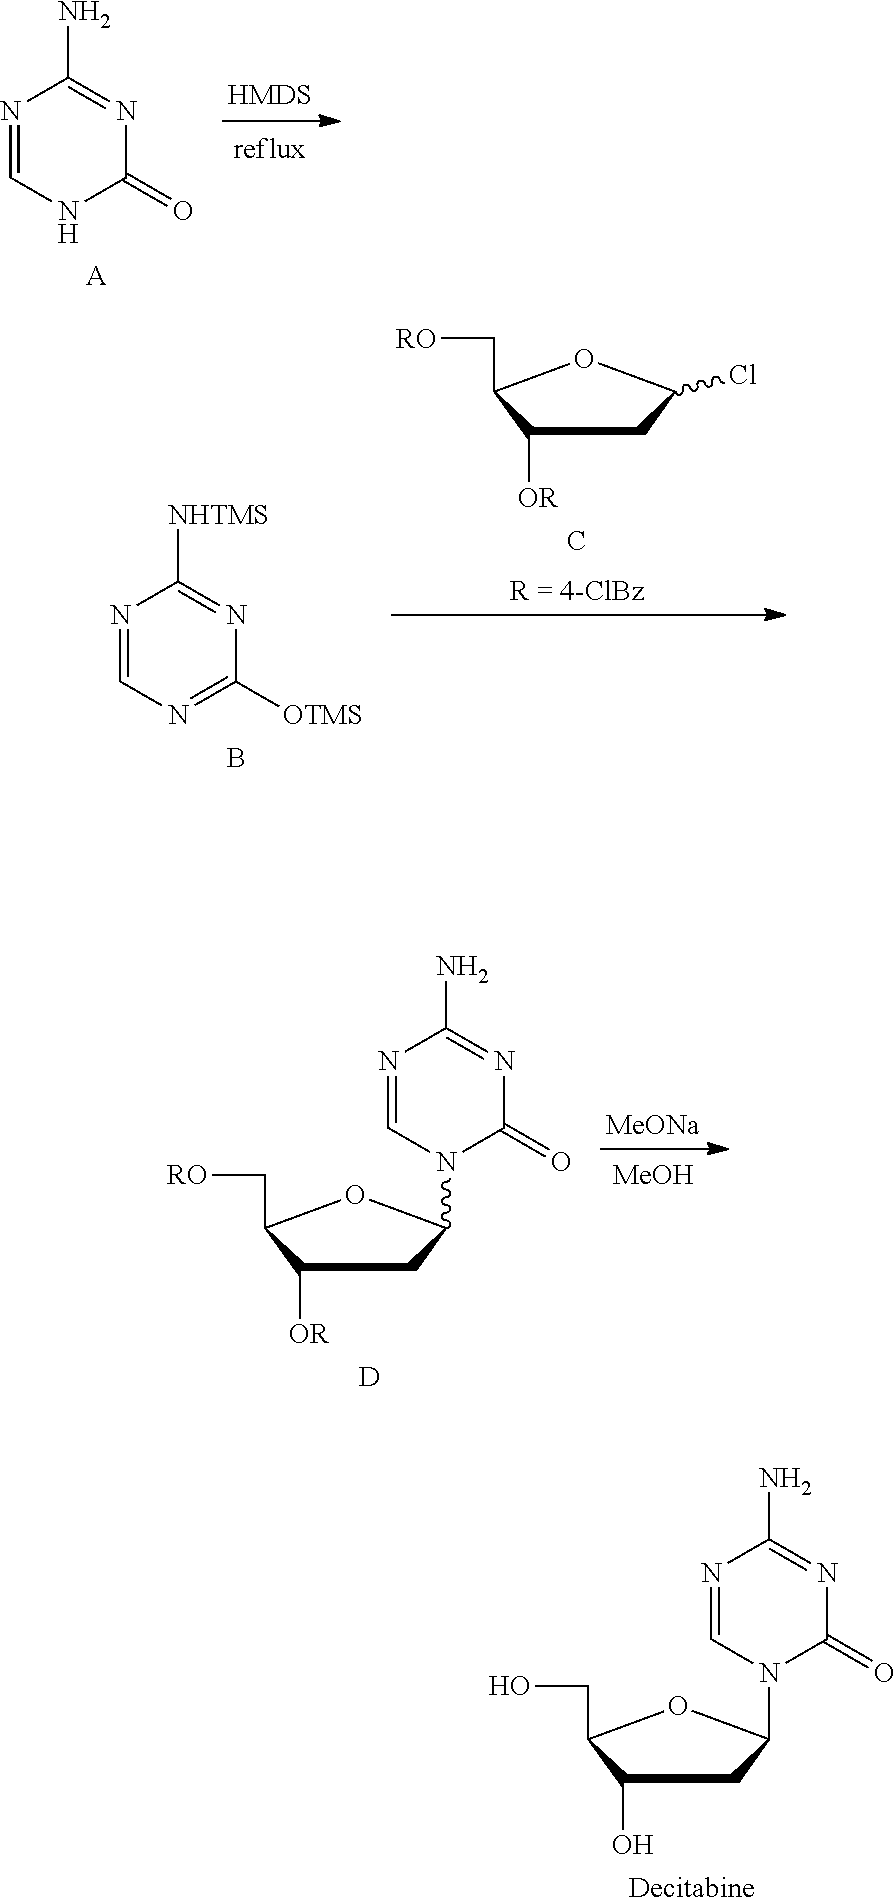 A method for preparing a ß-nucleoside compound